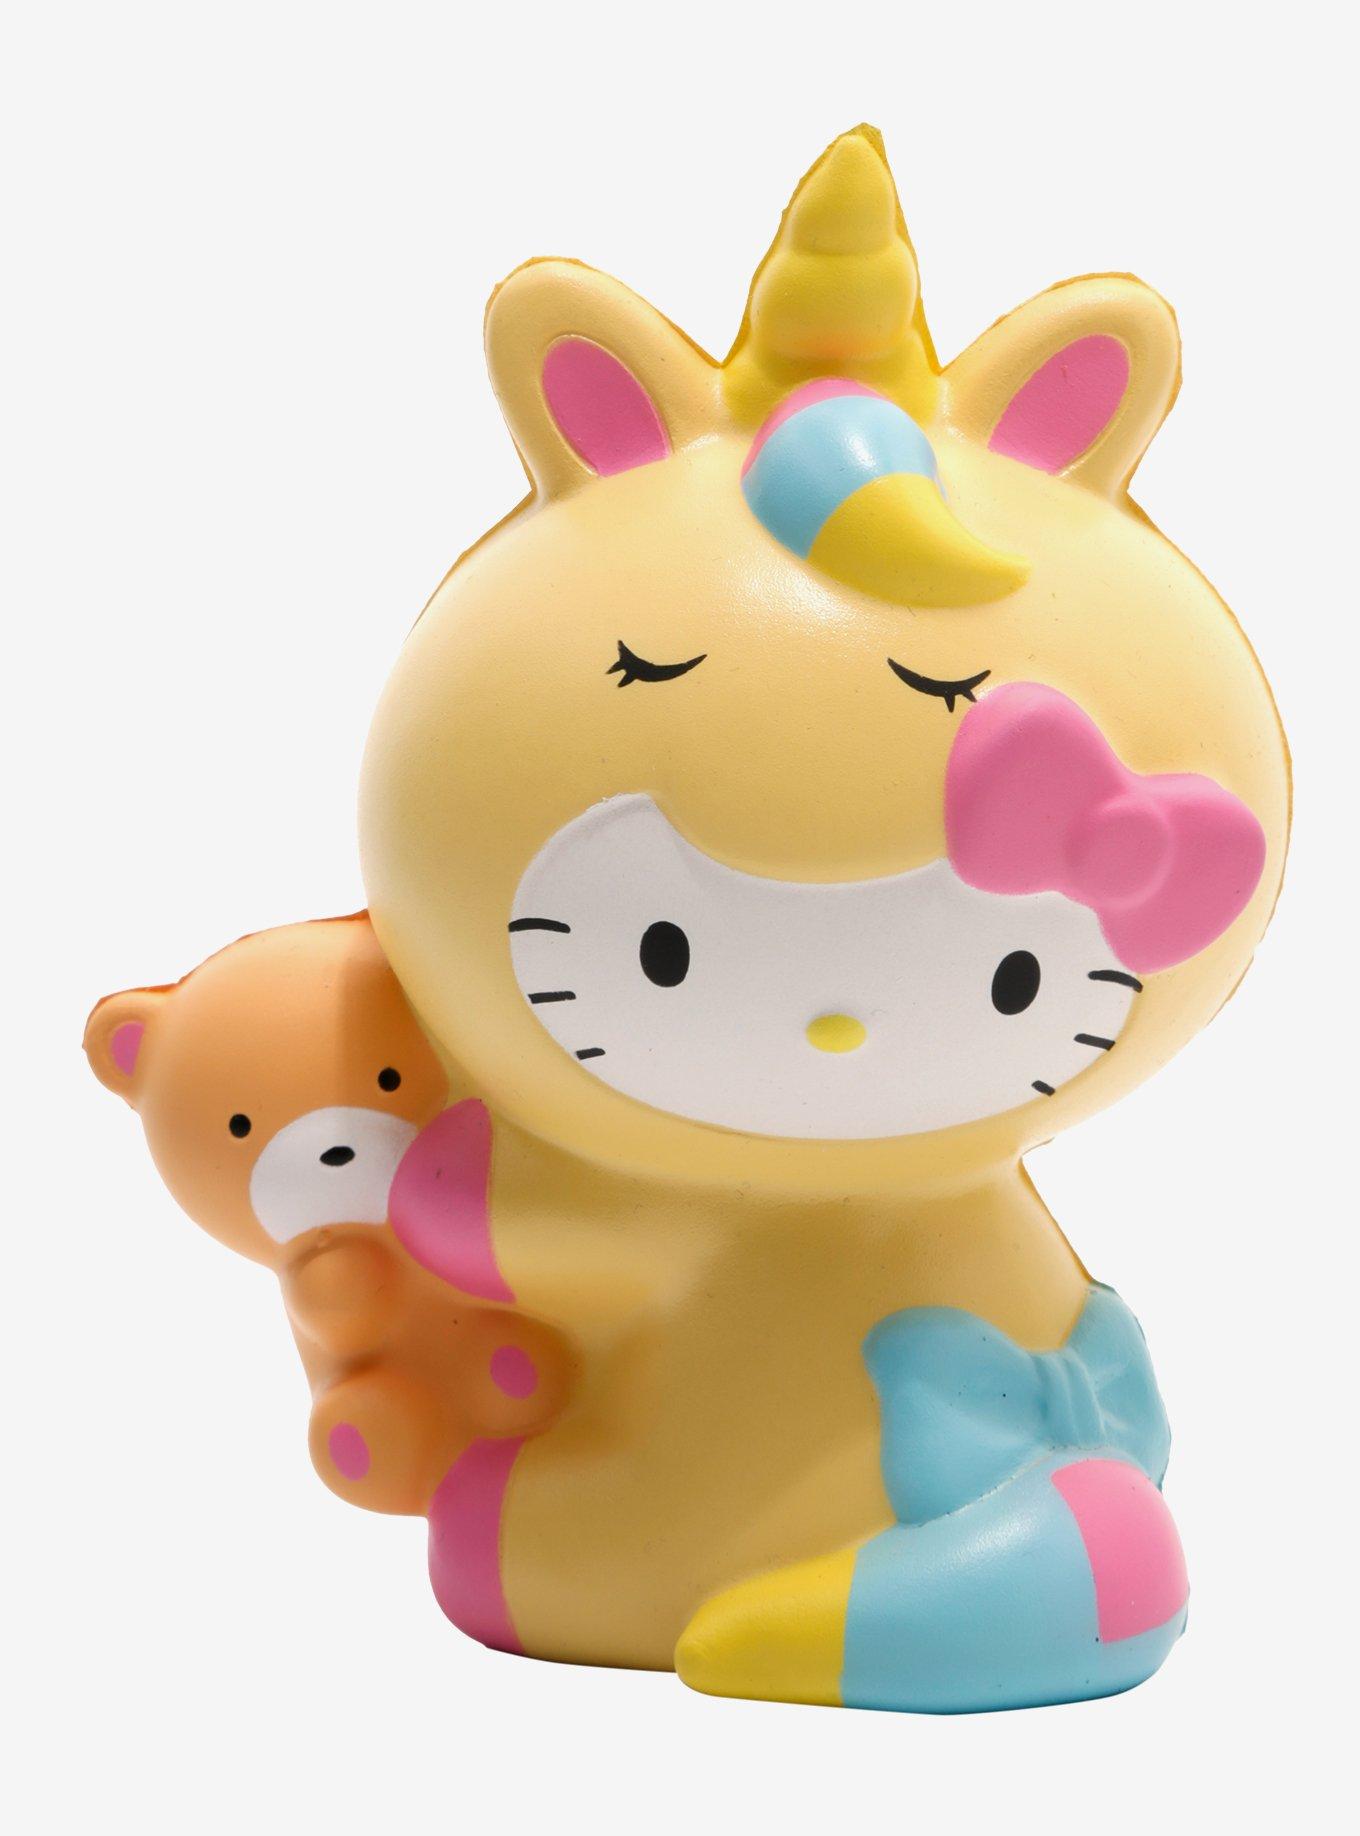 Hello Kitty Unicorn Squishy Toy Hot Topic Exclusive